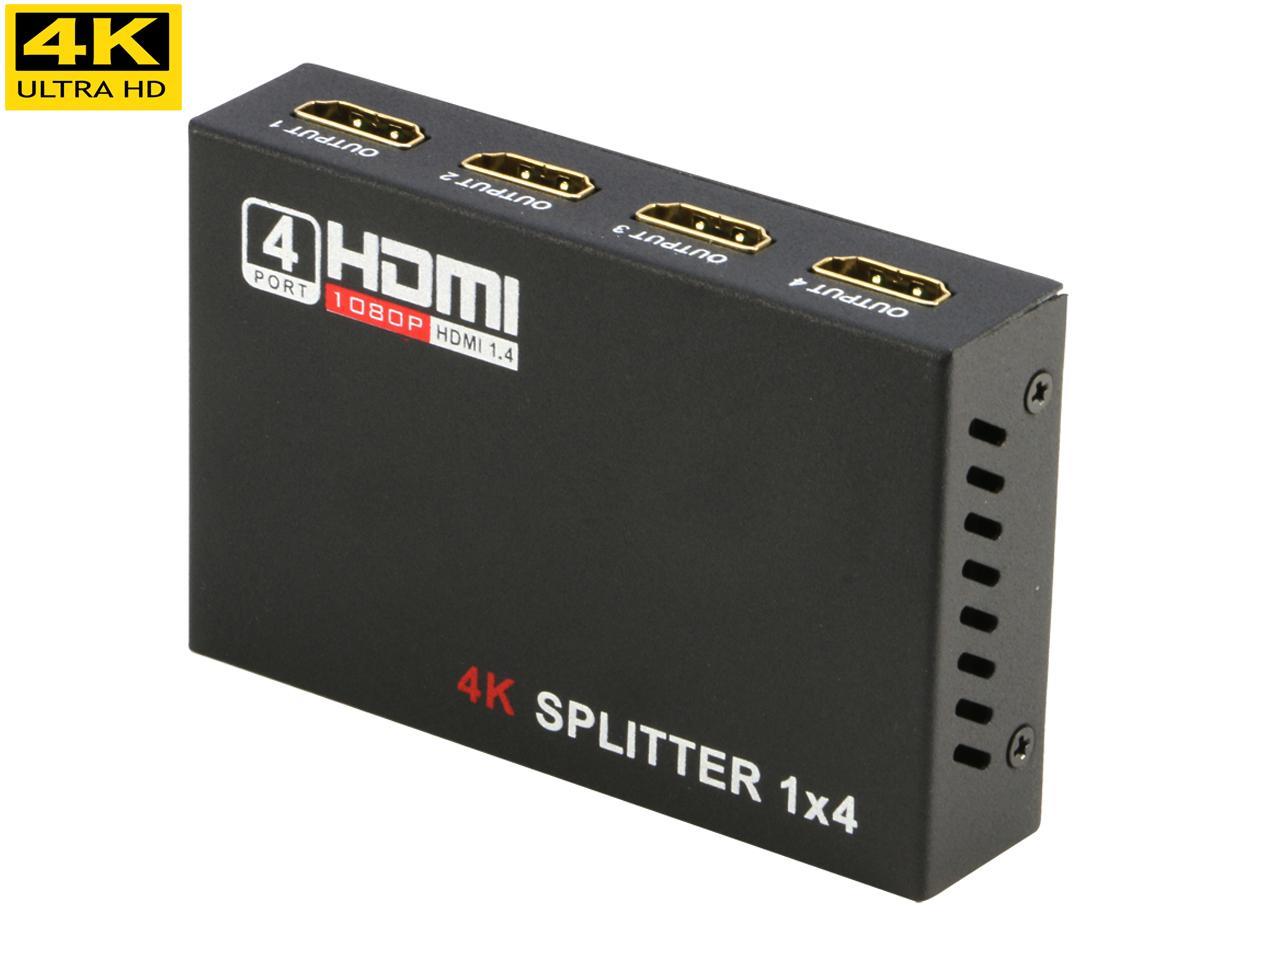 4k Hdmi Splitter Amplifier Riitop 1 In 4 Out Hdmi Hub Repeater Full Hd 4k 2k 30hz 1080p 1x4 Newegg Com